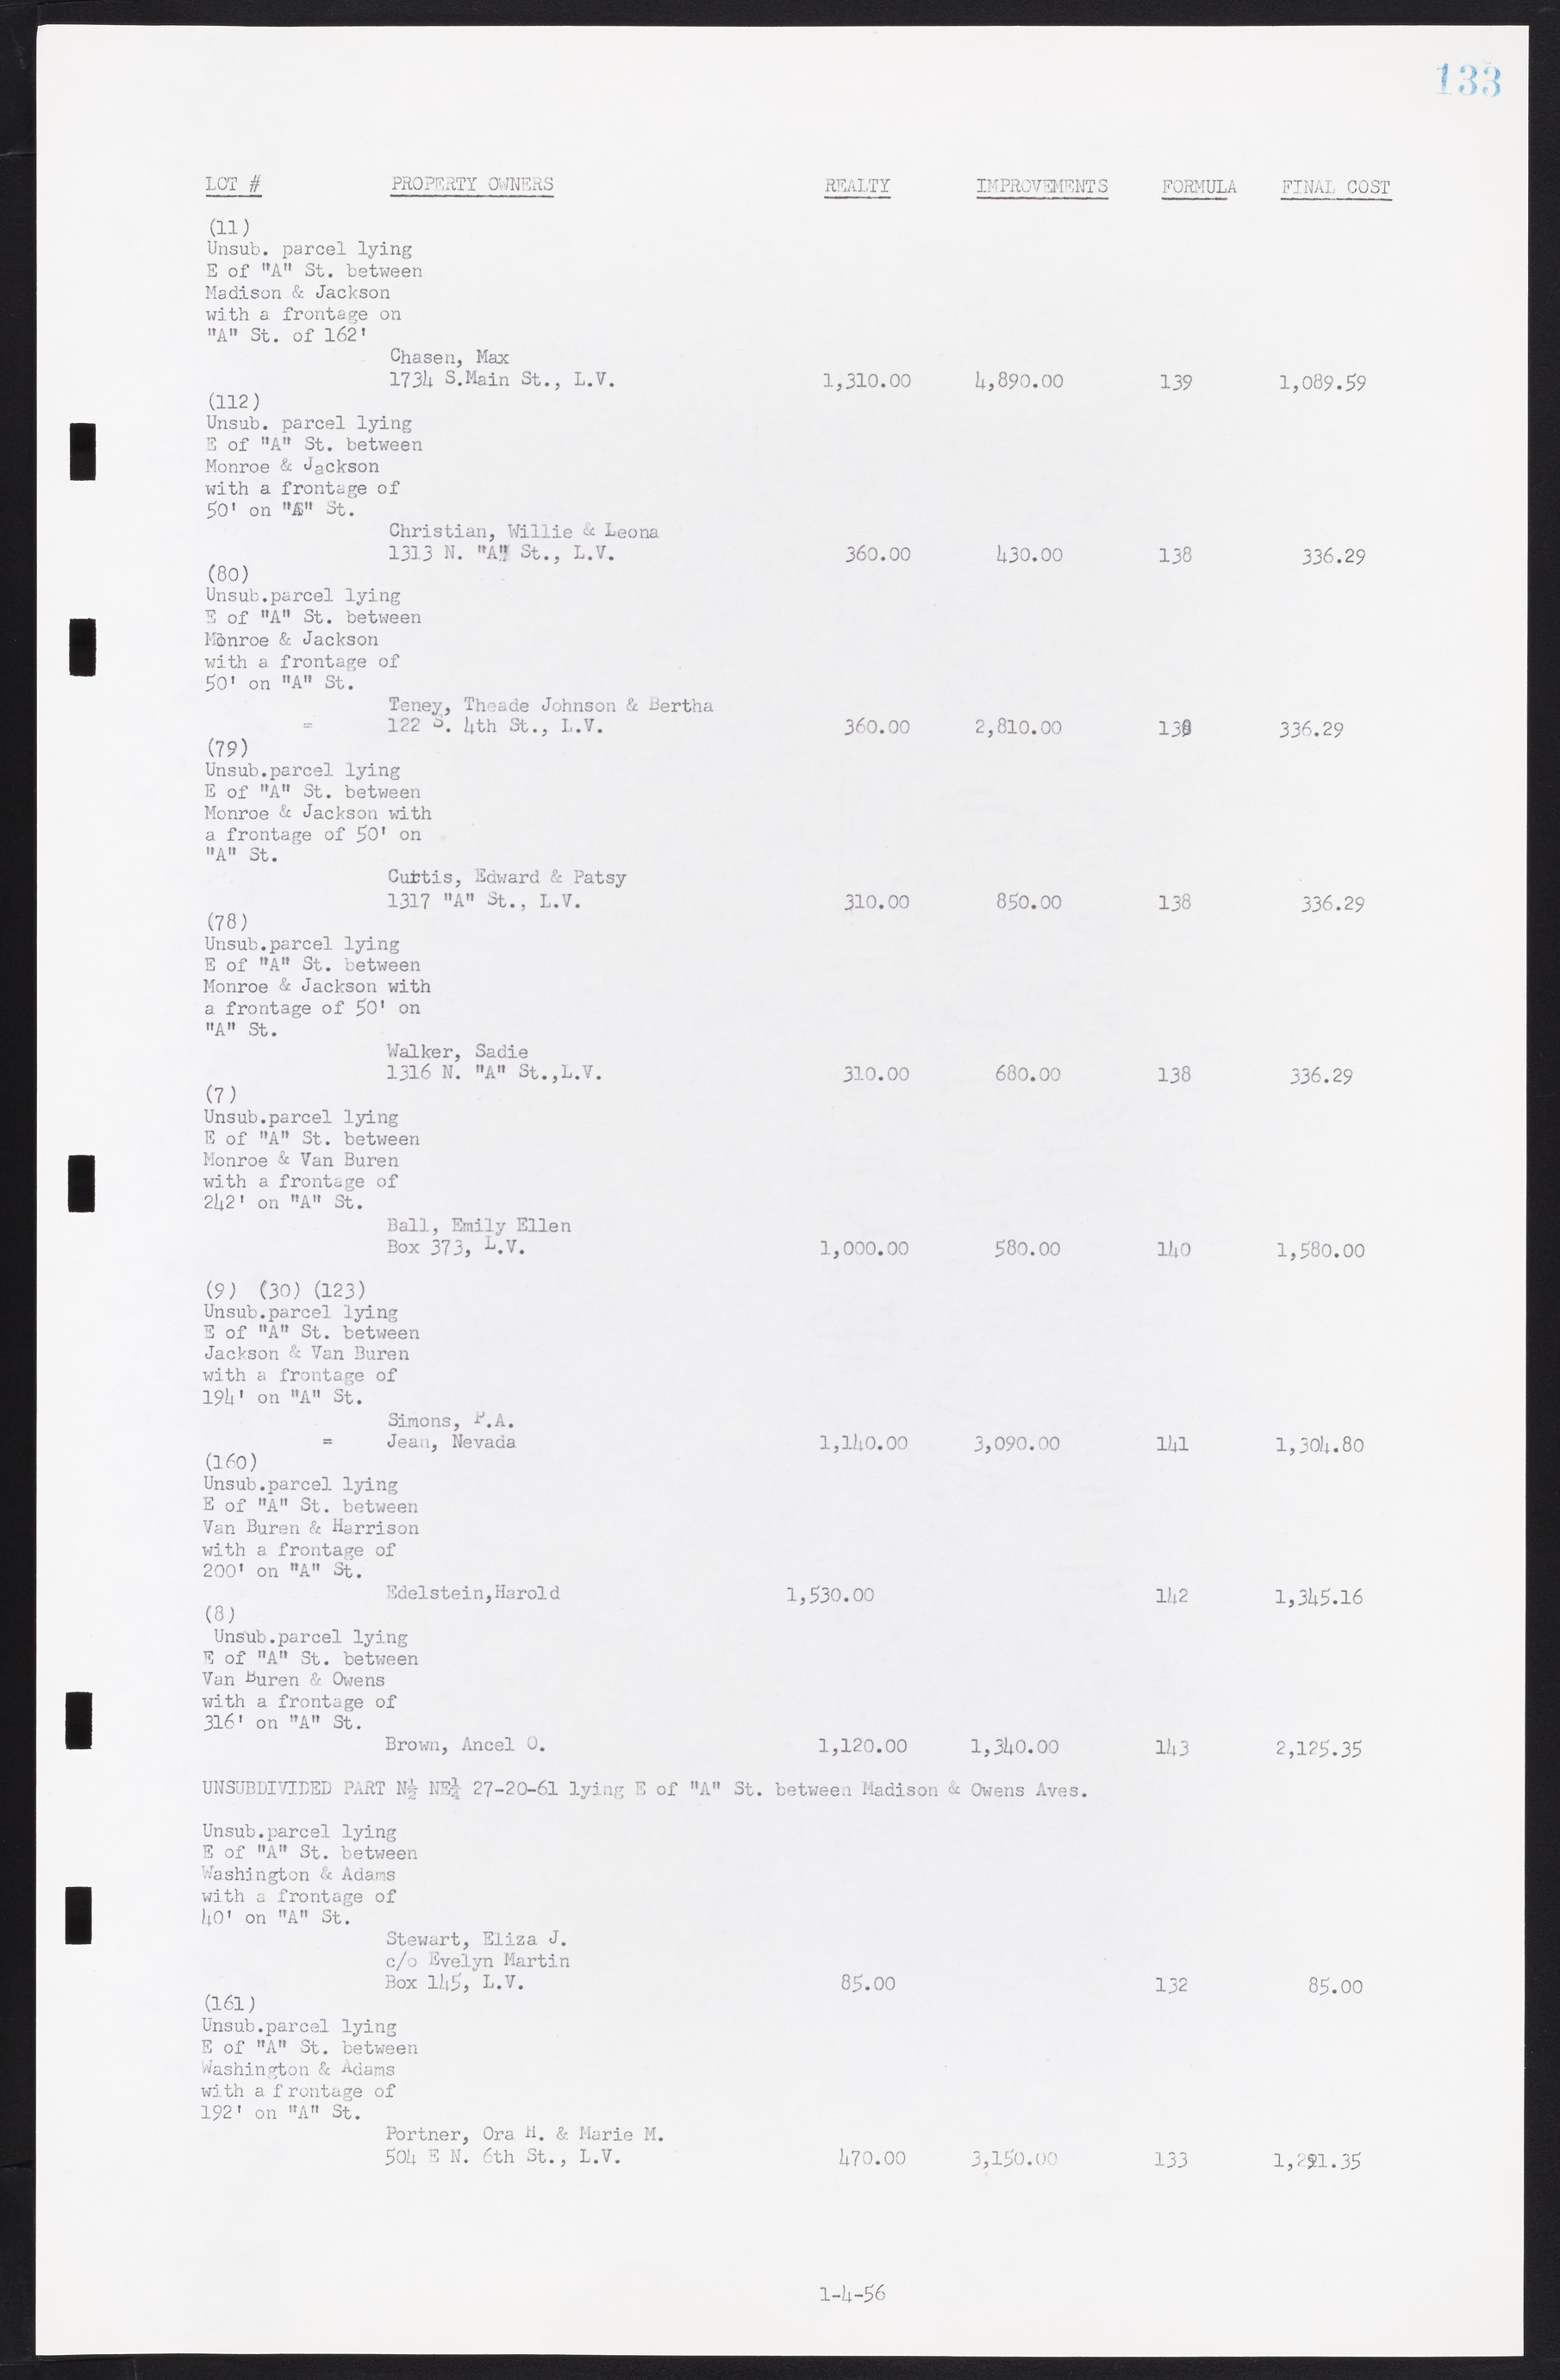 Las Vegas City Commission Minutes, September 21, 1955 to November 20, 1957, lvc000010-143